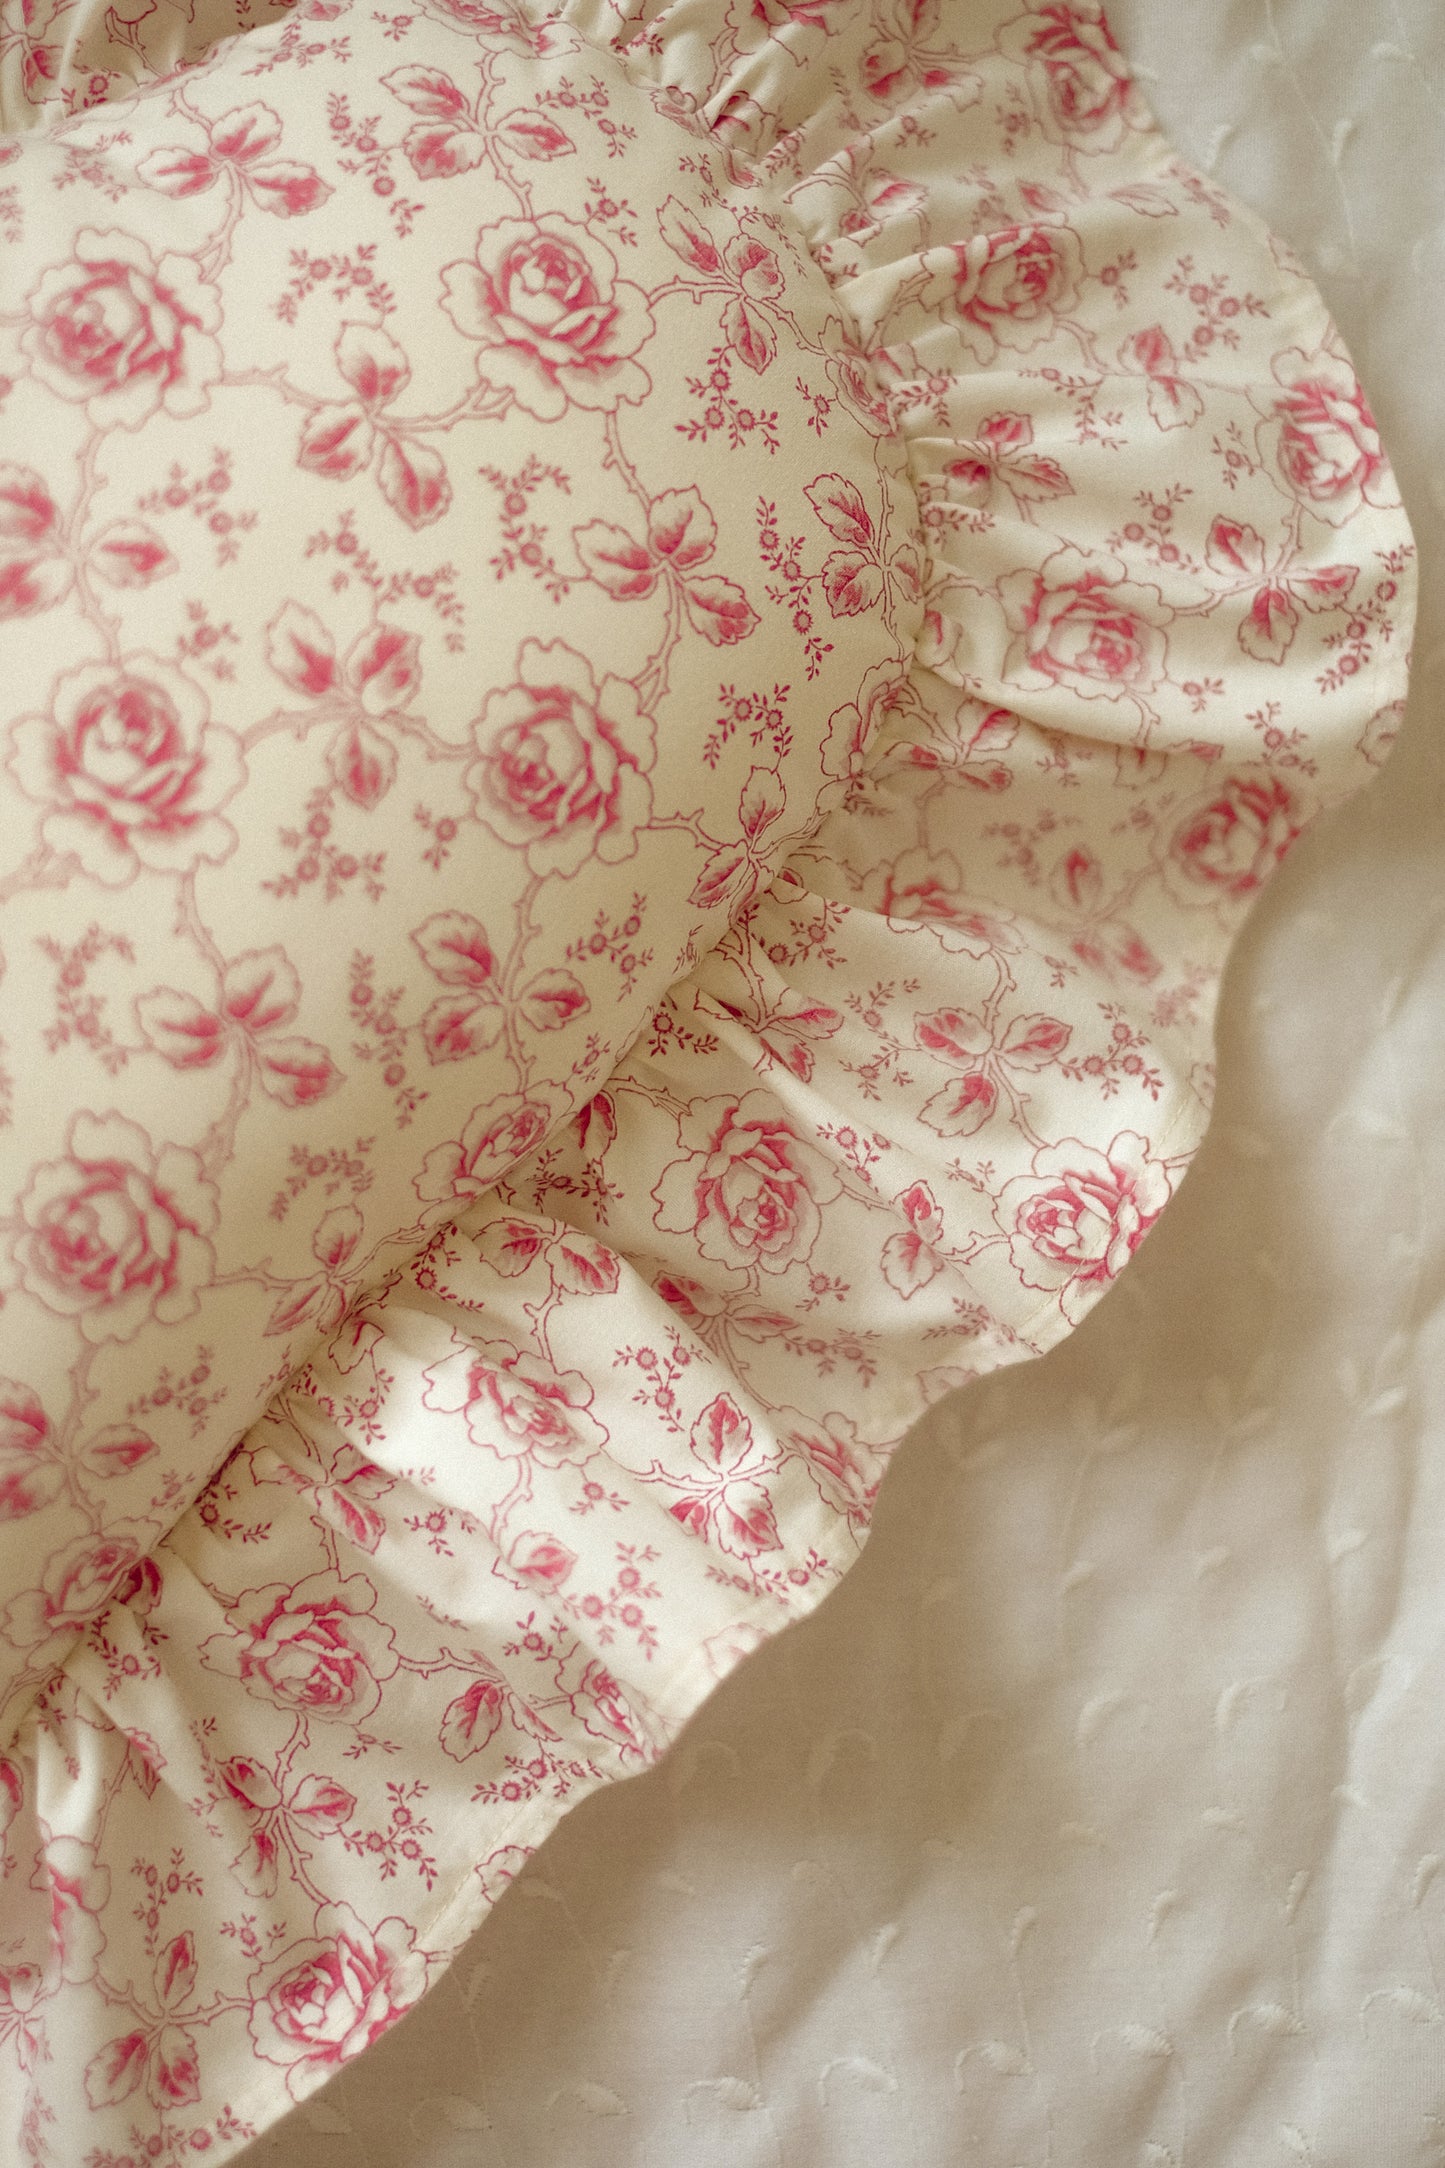 Handmade ruffled heart pillow - Rosebud♡